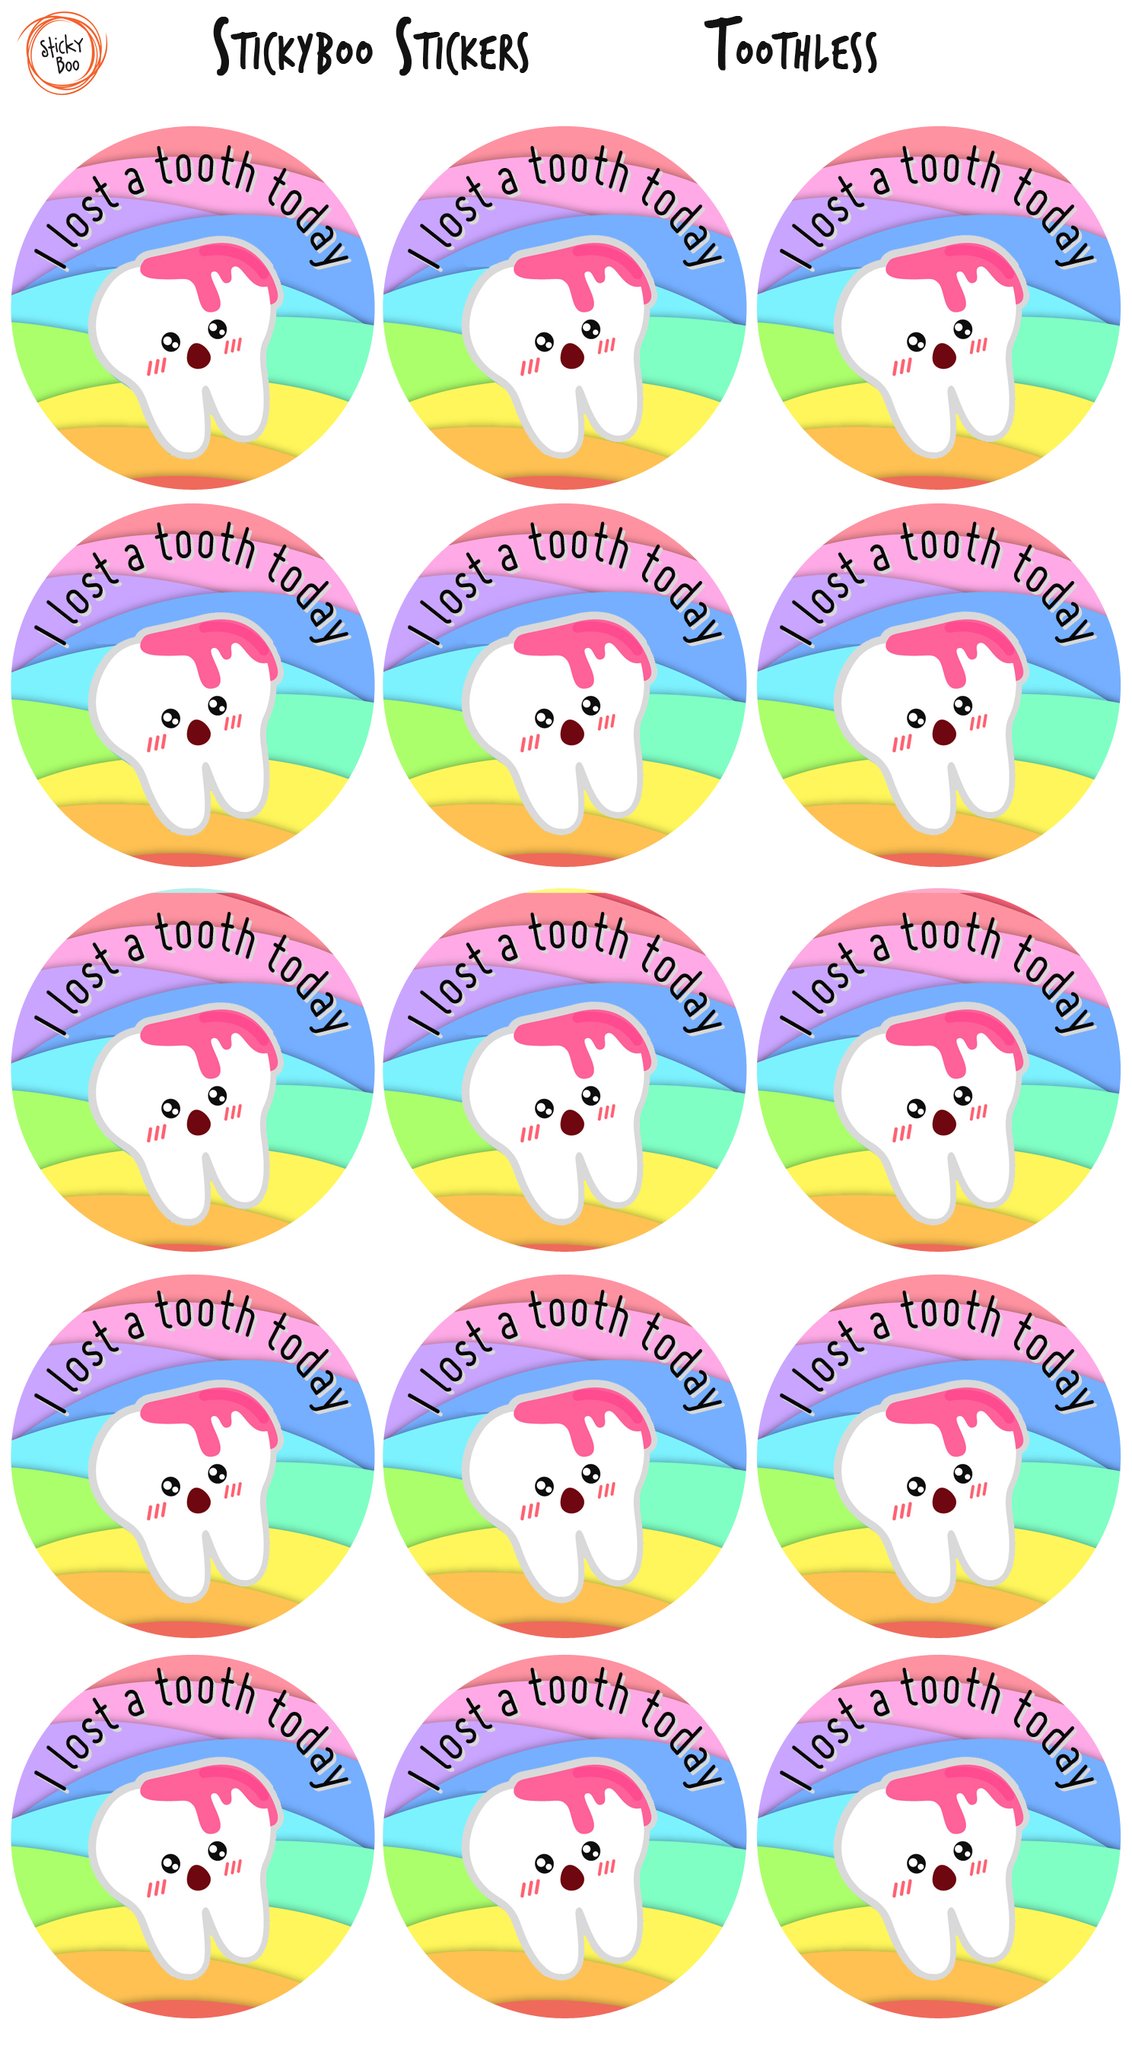 Sticky Boo Reward Stickers - Toothless